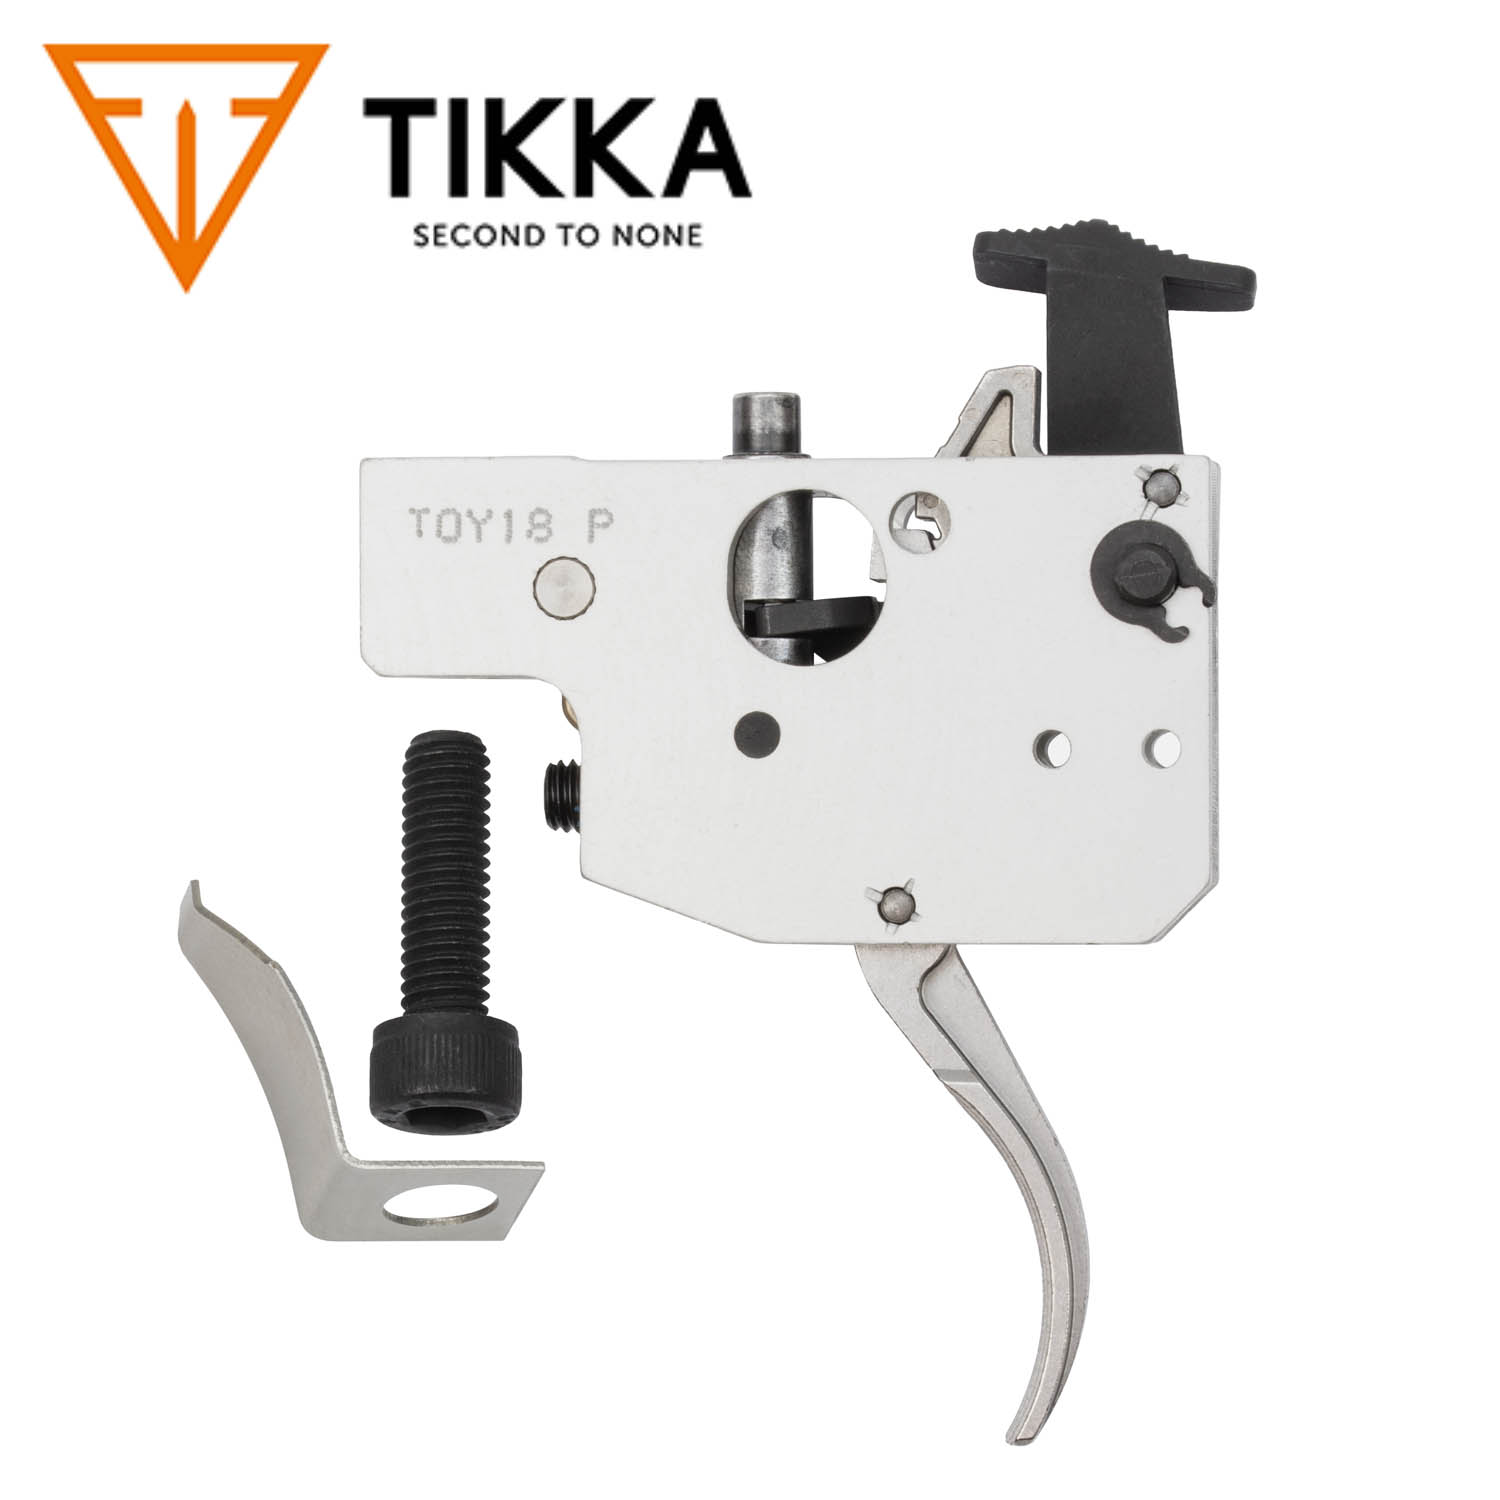 Détente Tikka : incident de tir S585T110